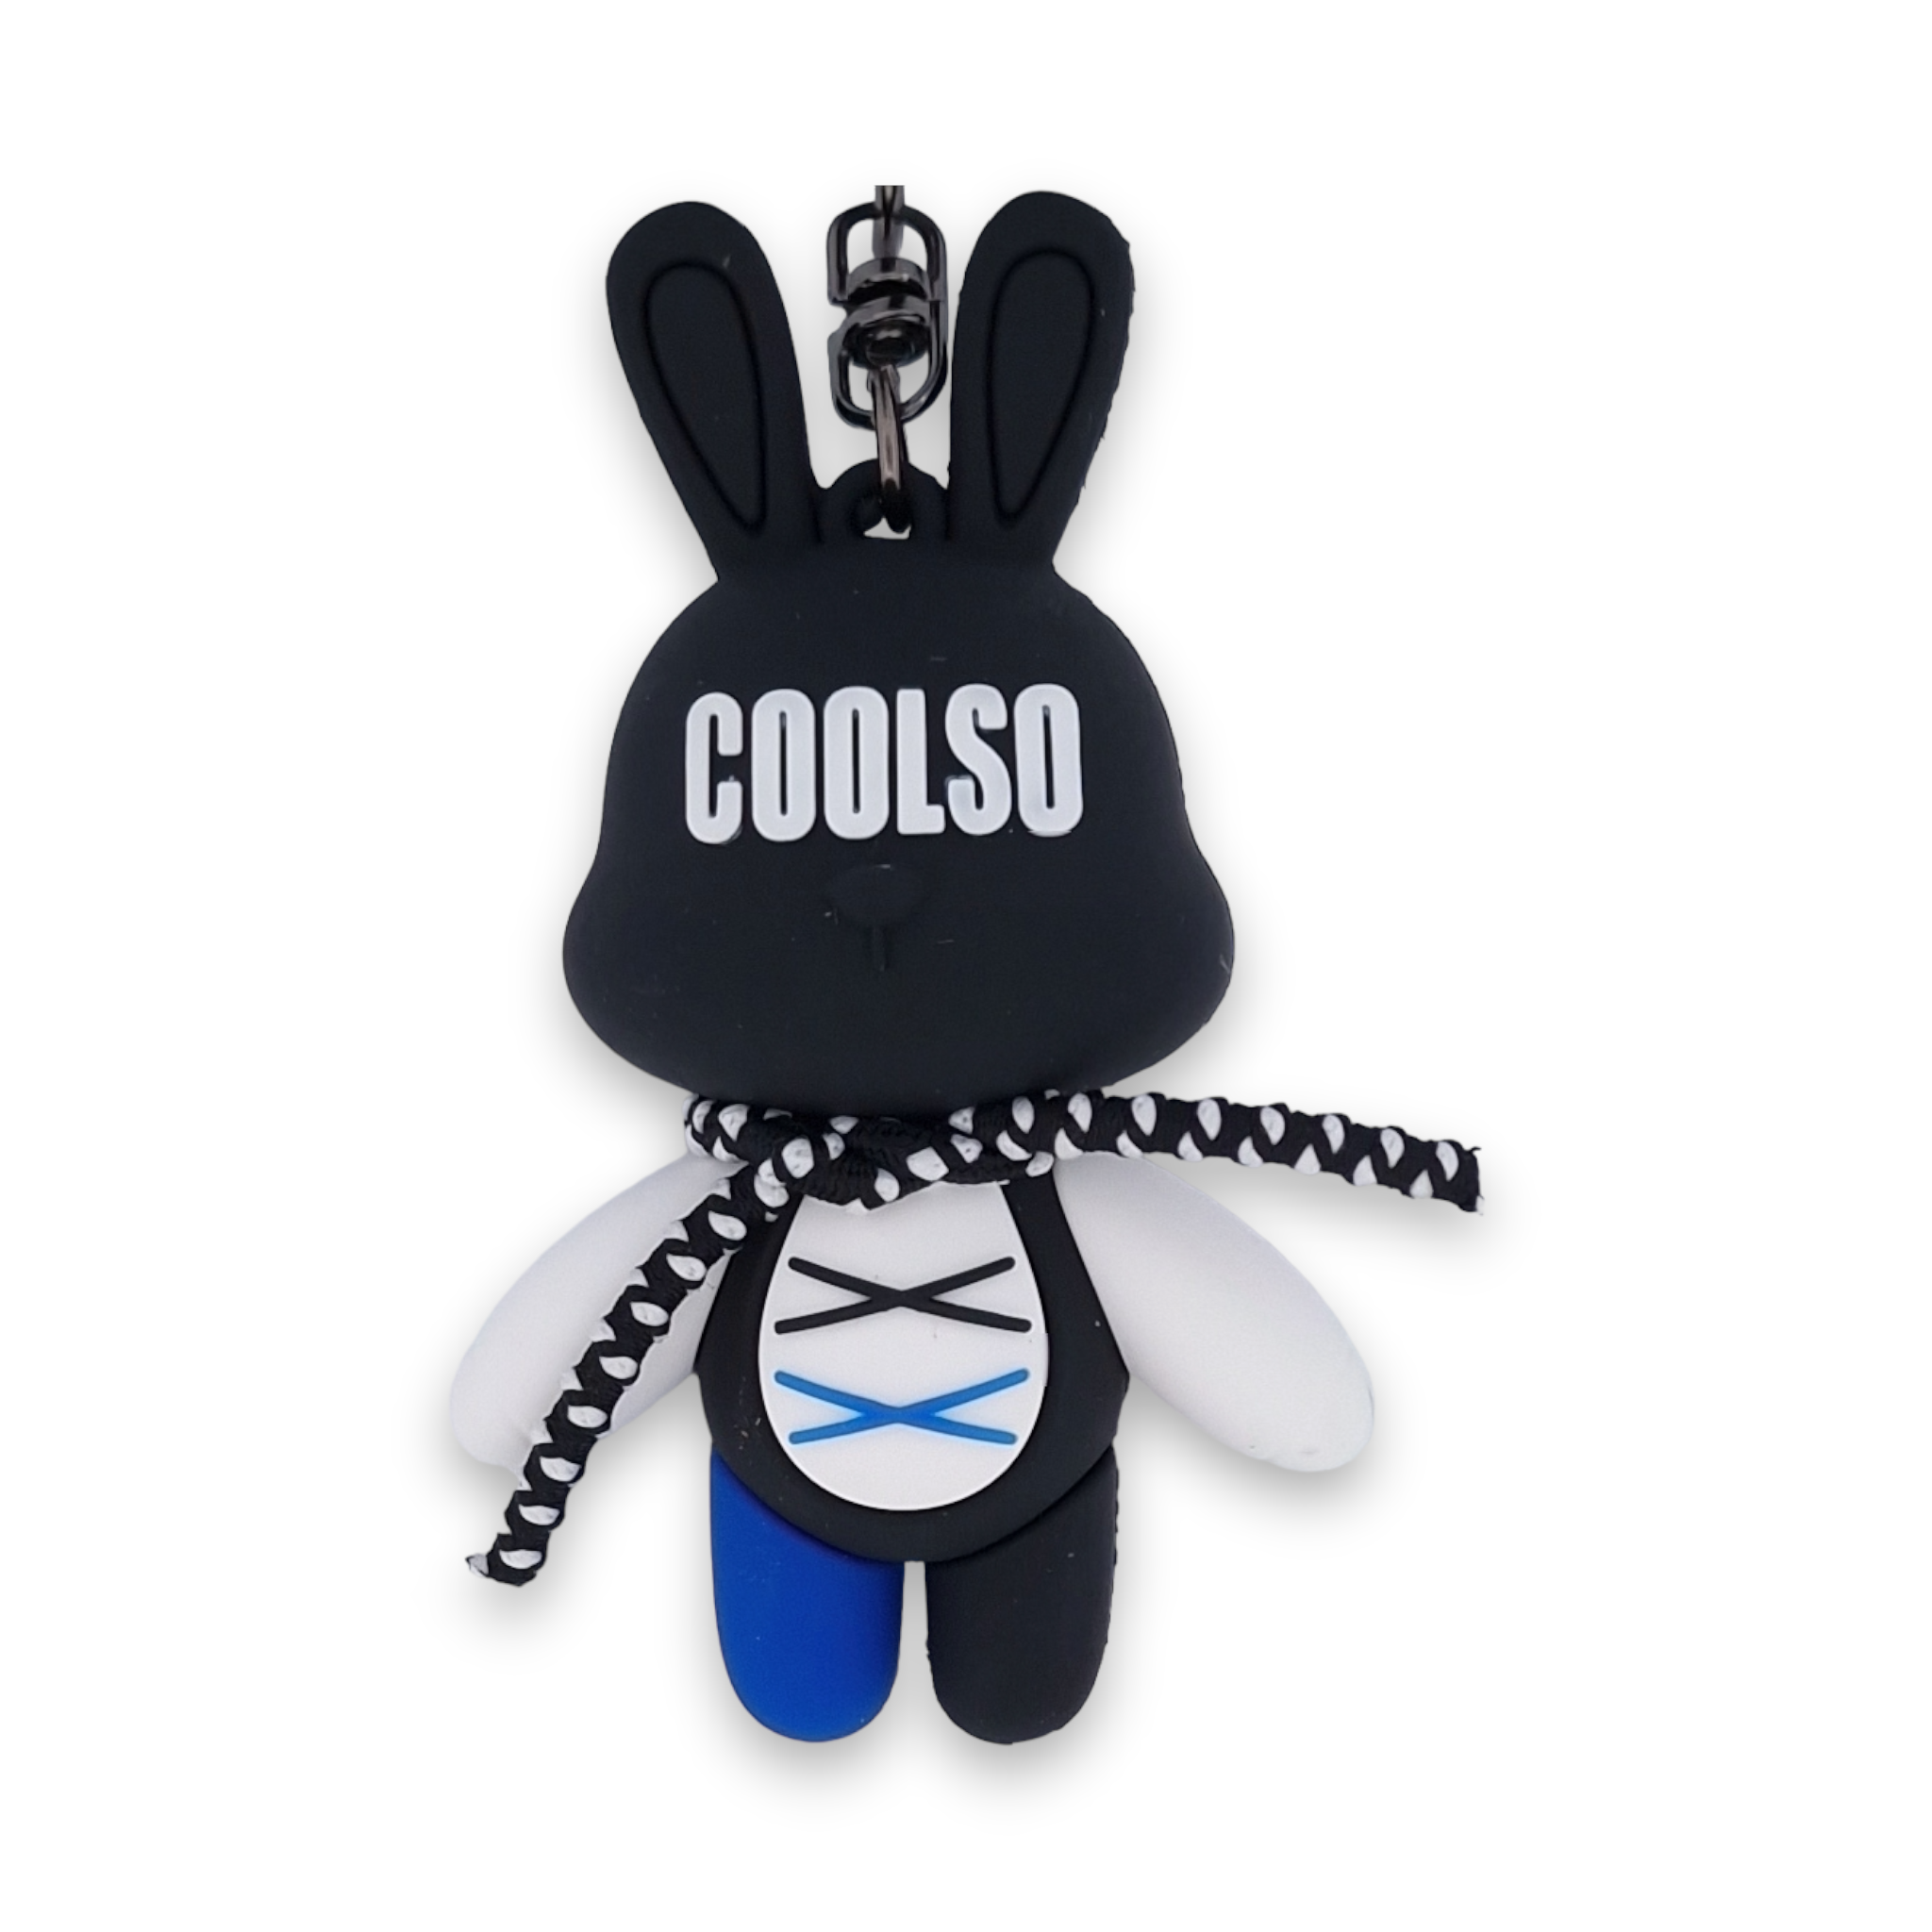 COOLSO Black Rabbit Keychain